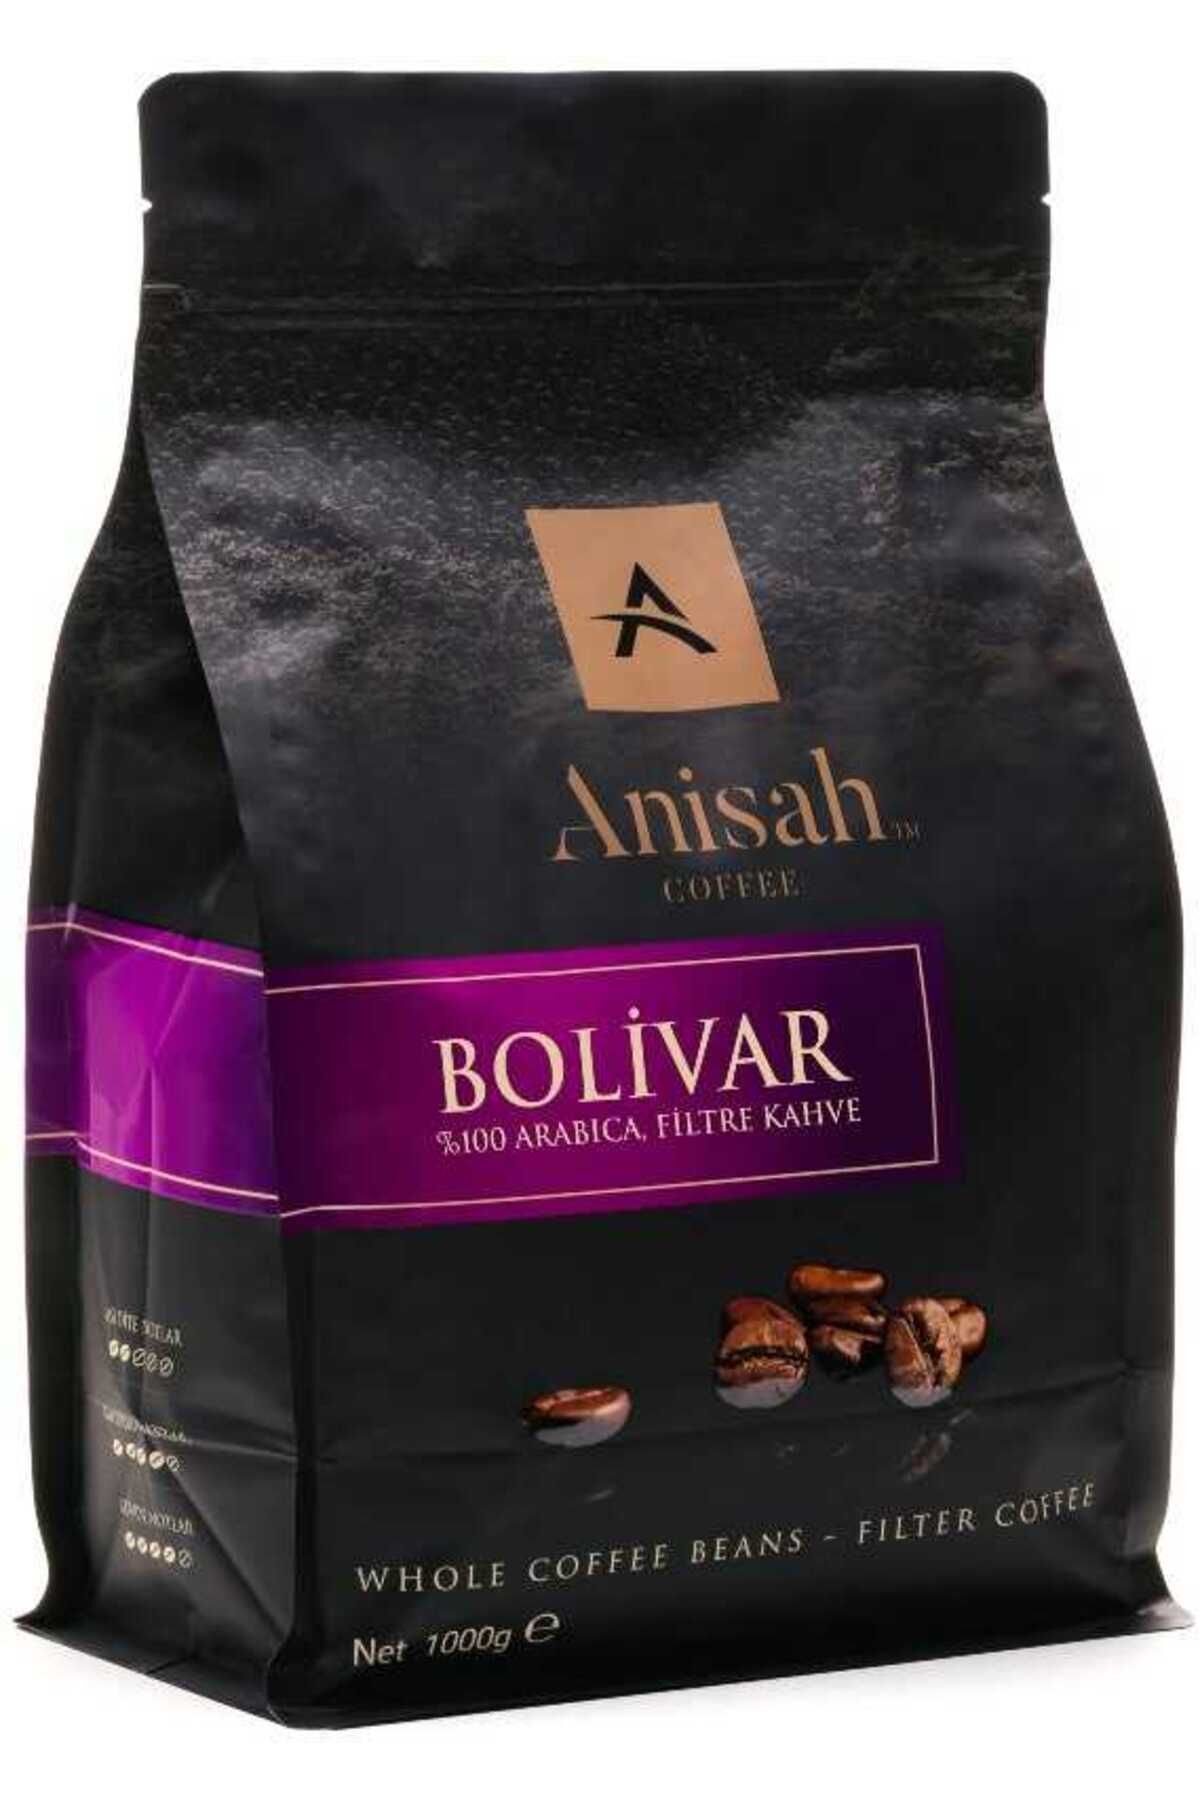 Anisah Coffee Colombia Bolivar Çekirdek Filtre Kahve 1000 Gram